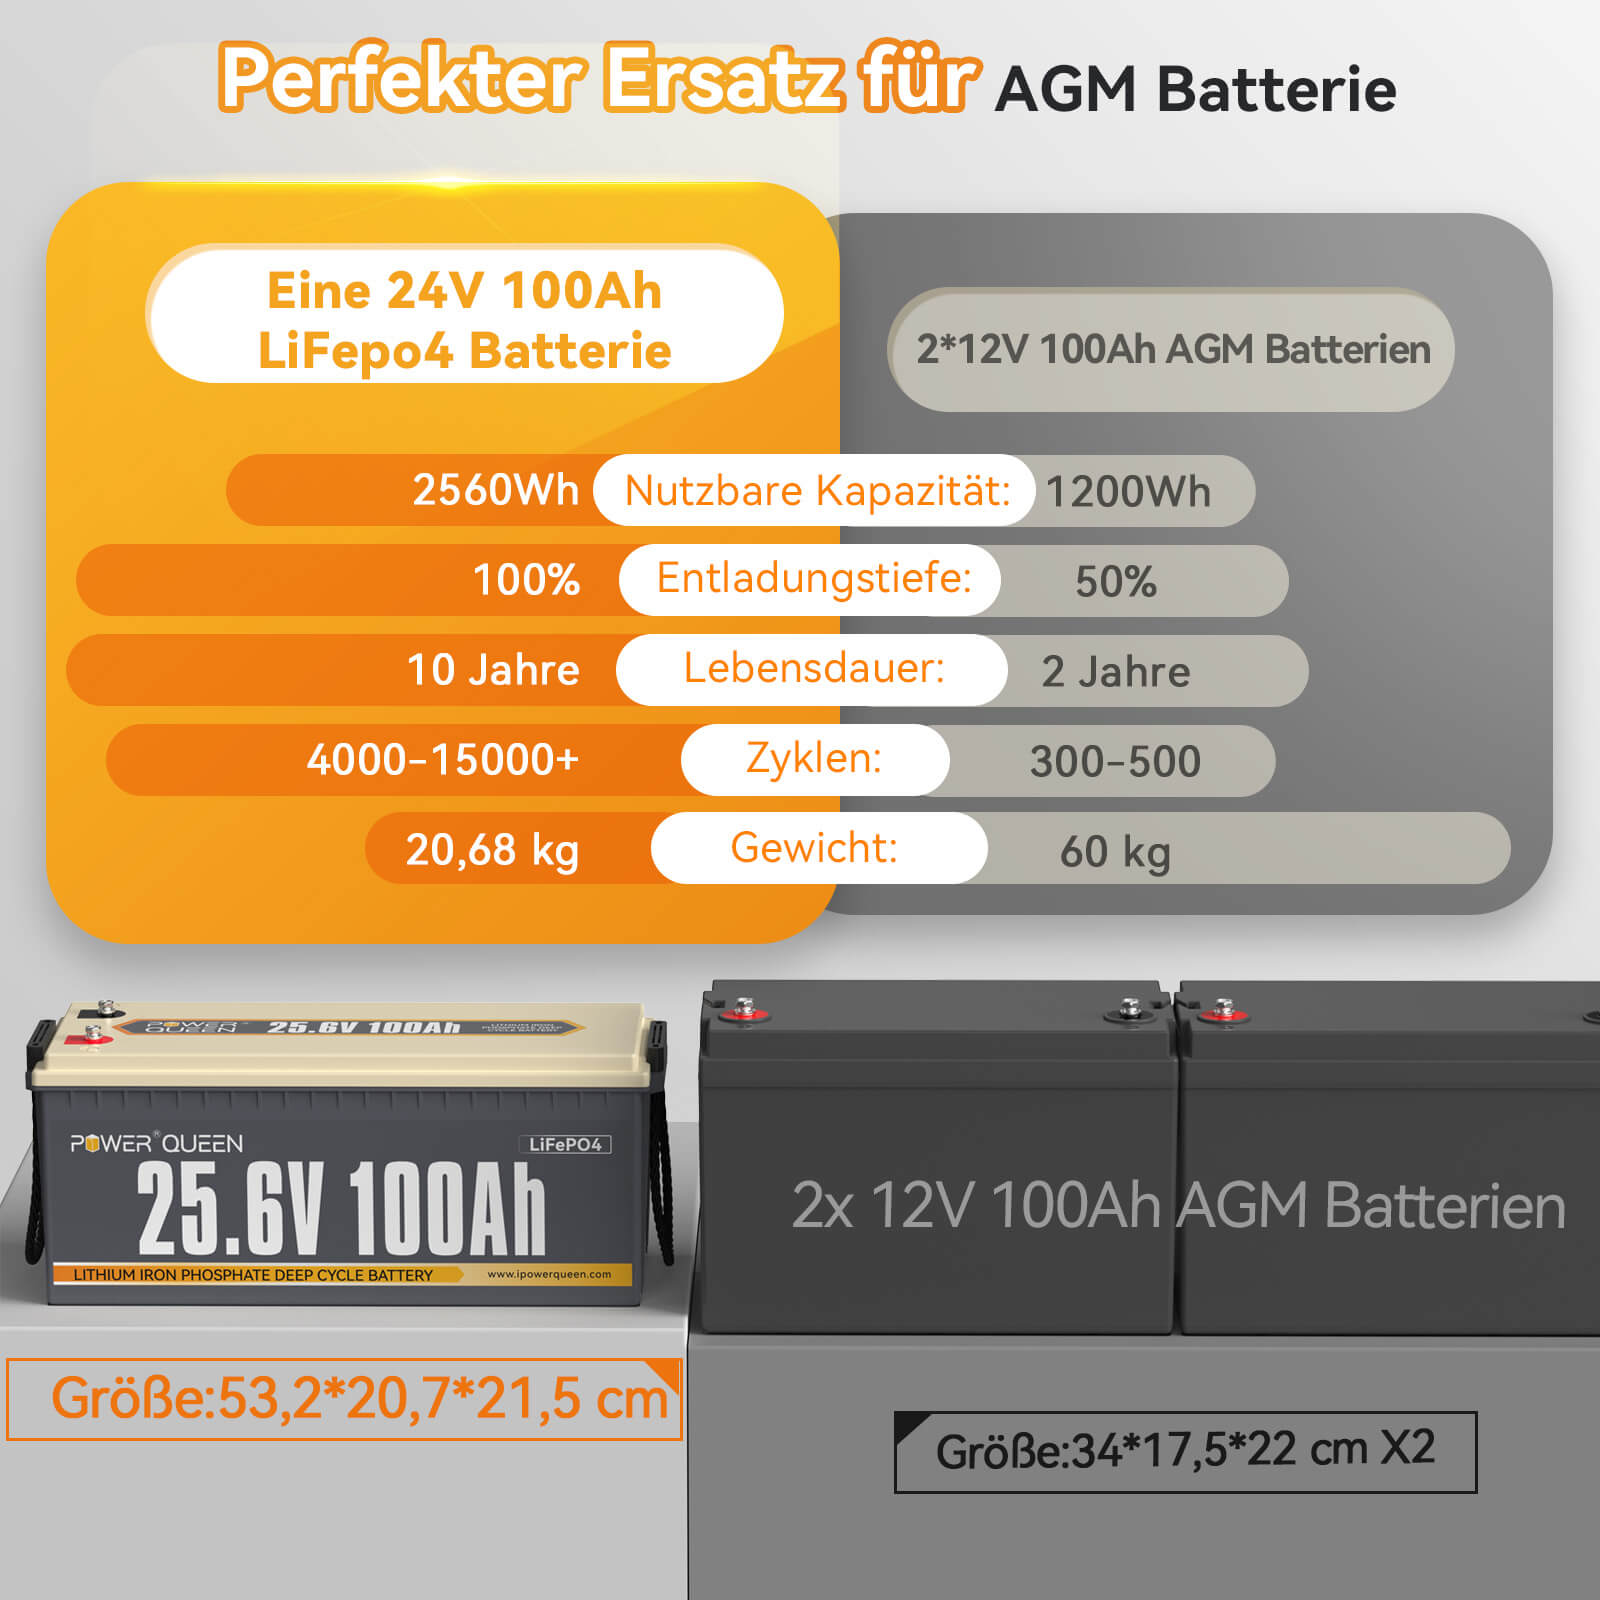 【Comme neuf】Batterie Power Queen 25,6 V 100 Ah LiFePO4, BMS 100 A intégré